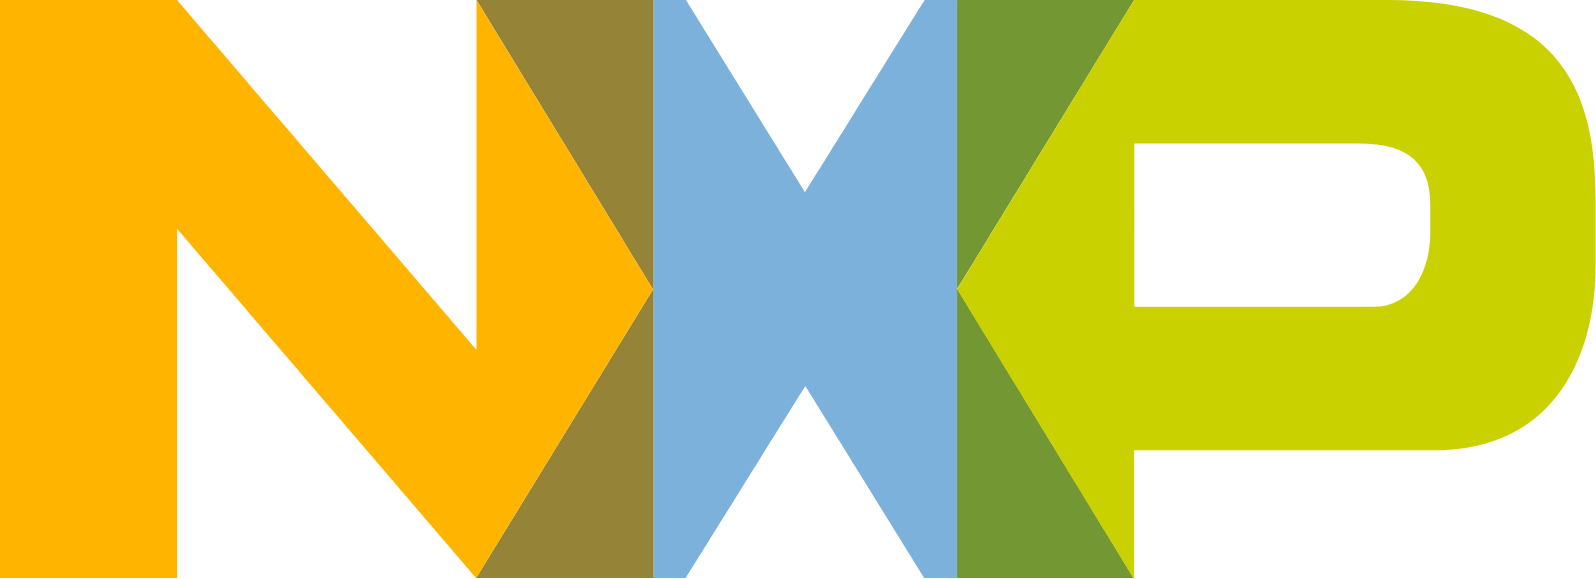 NXP it companies in Netherlands